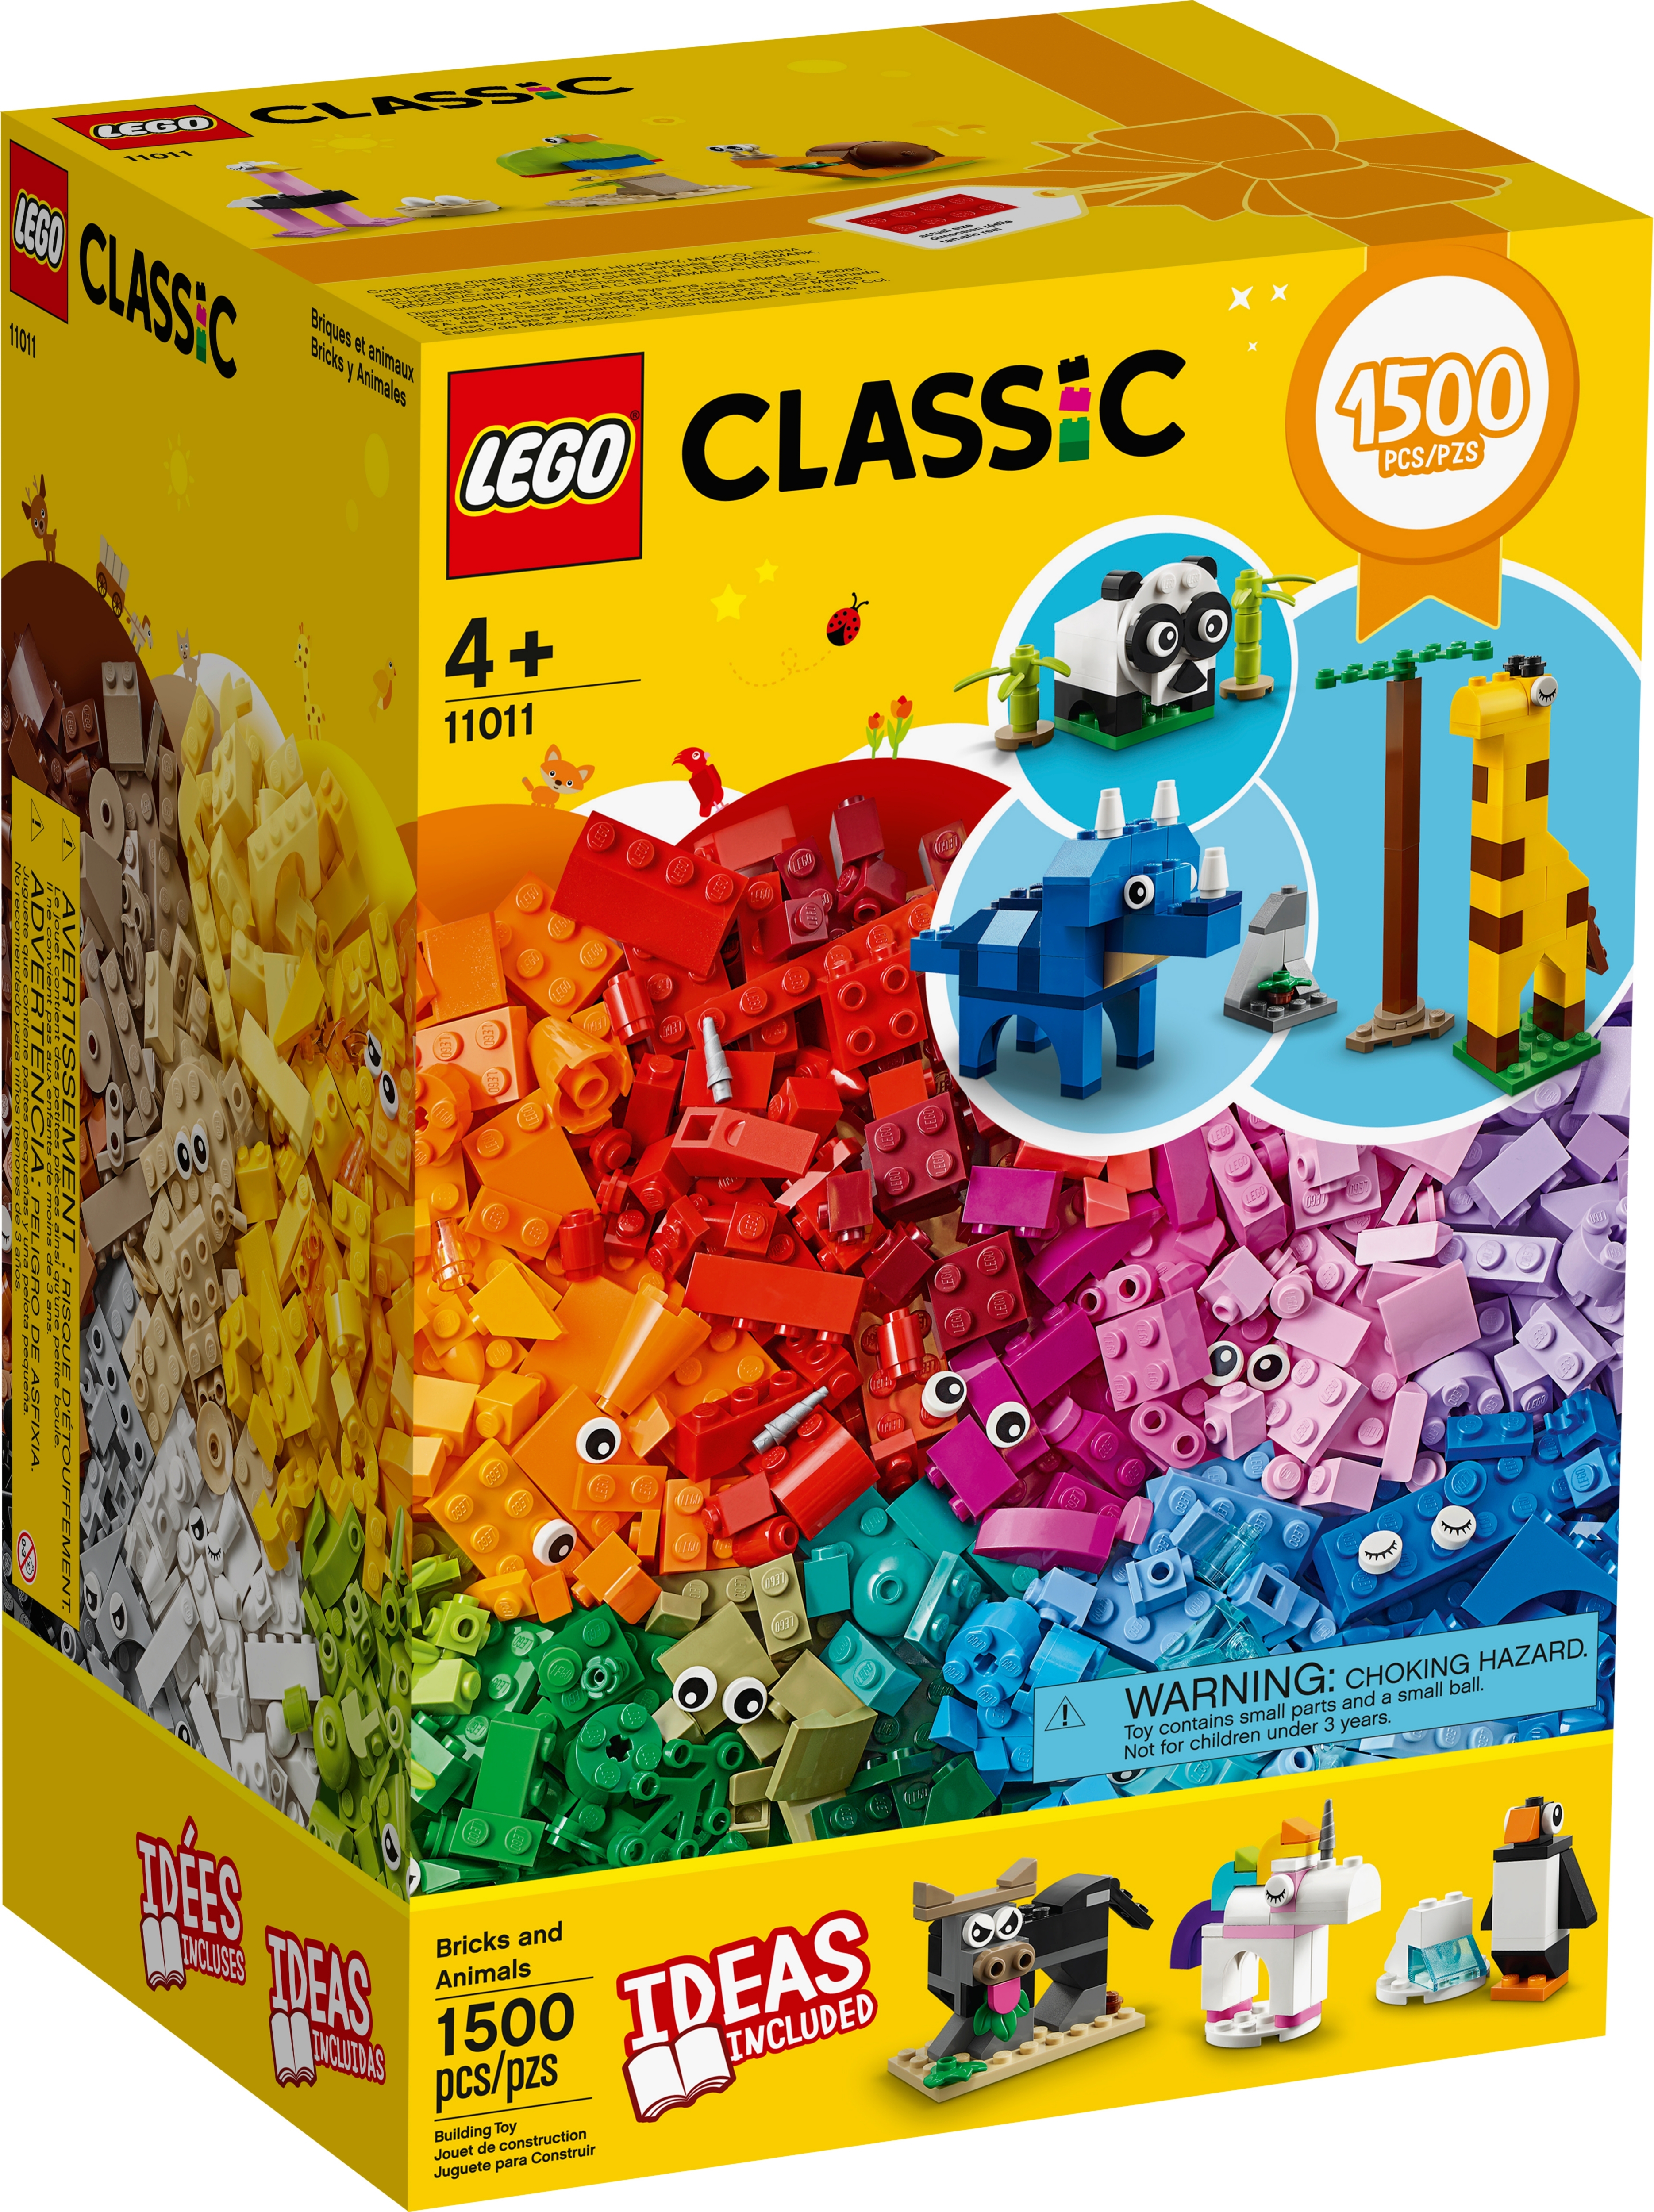 1500 classic lego set